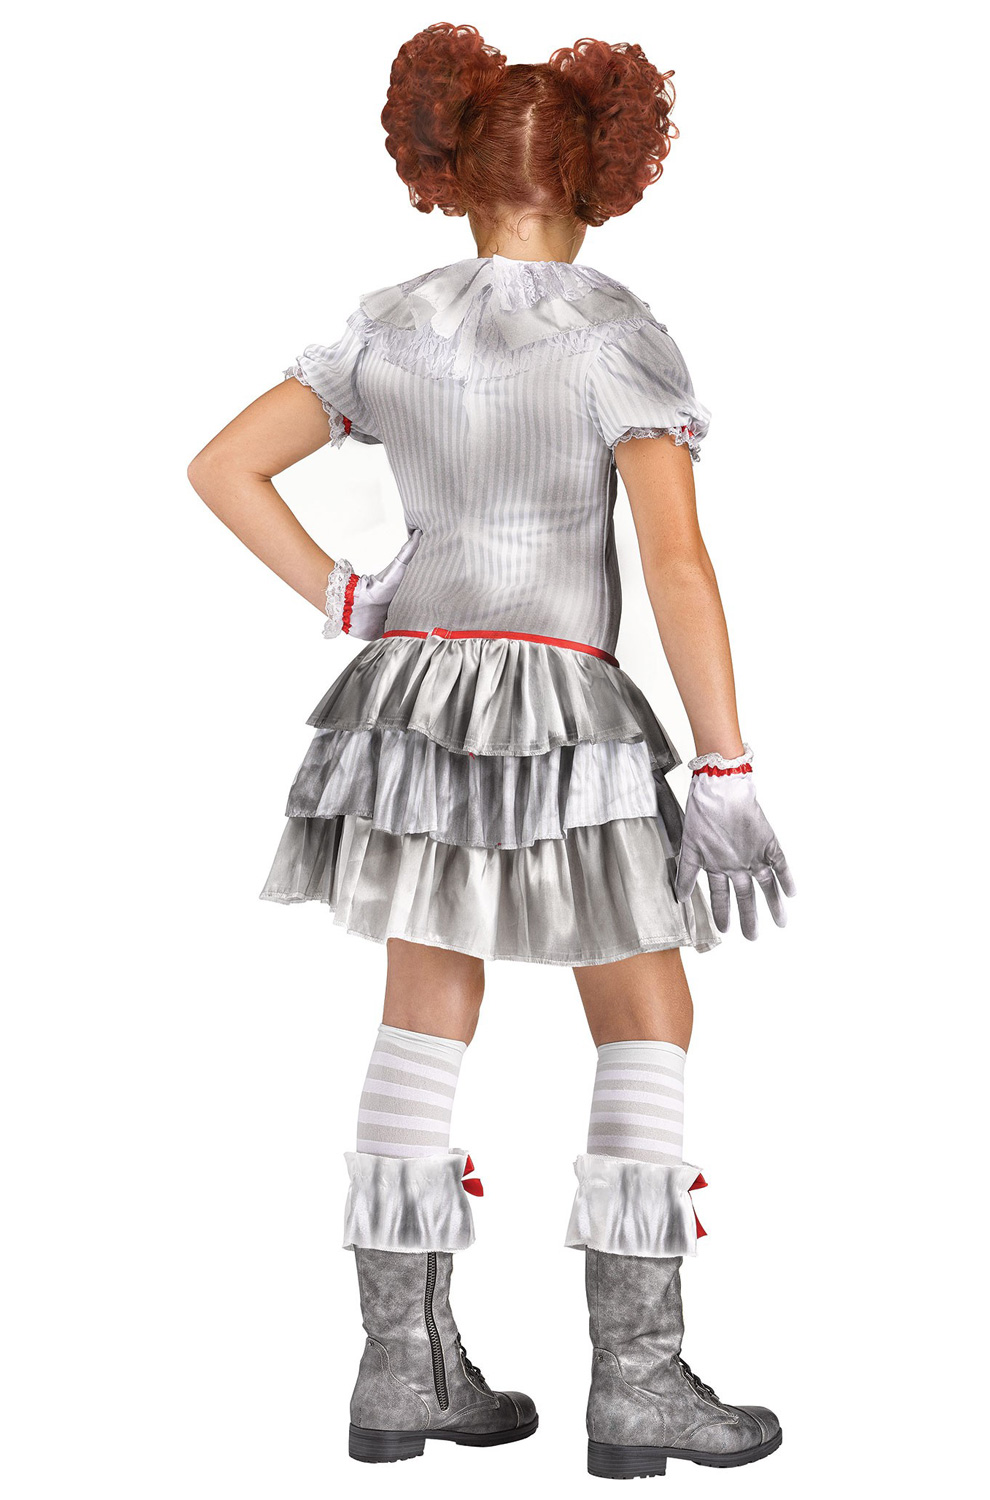 FunWorld Costumes Child's Girl's Carn-Evil Carnival Clown Costume Medium 8-10 - image 2 of 2